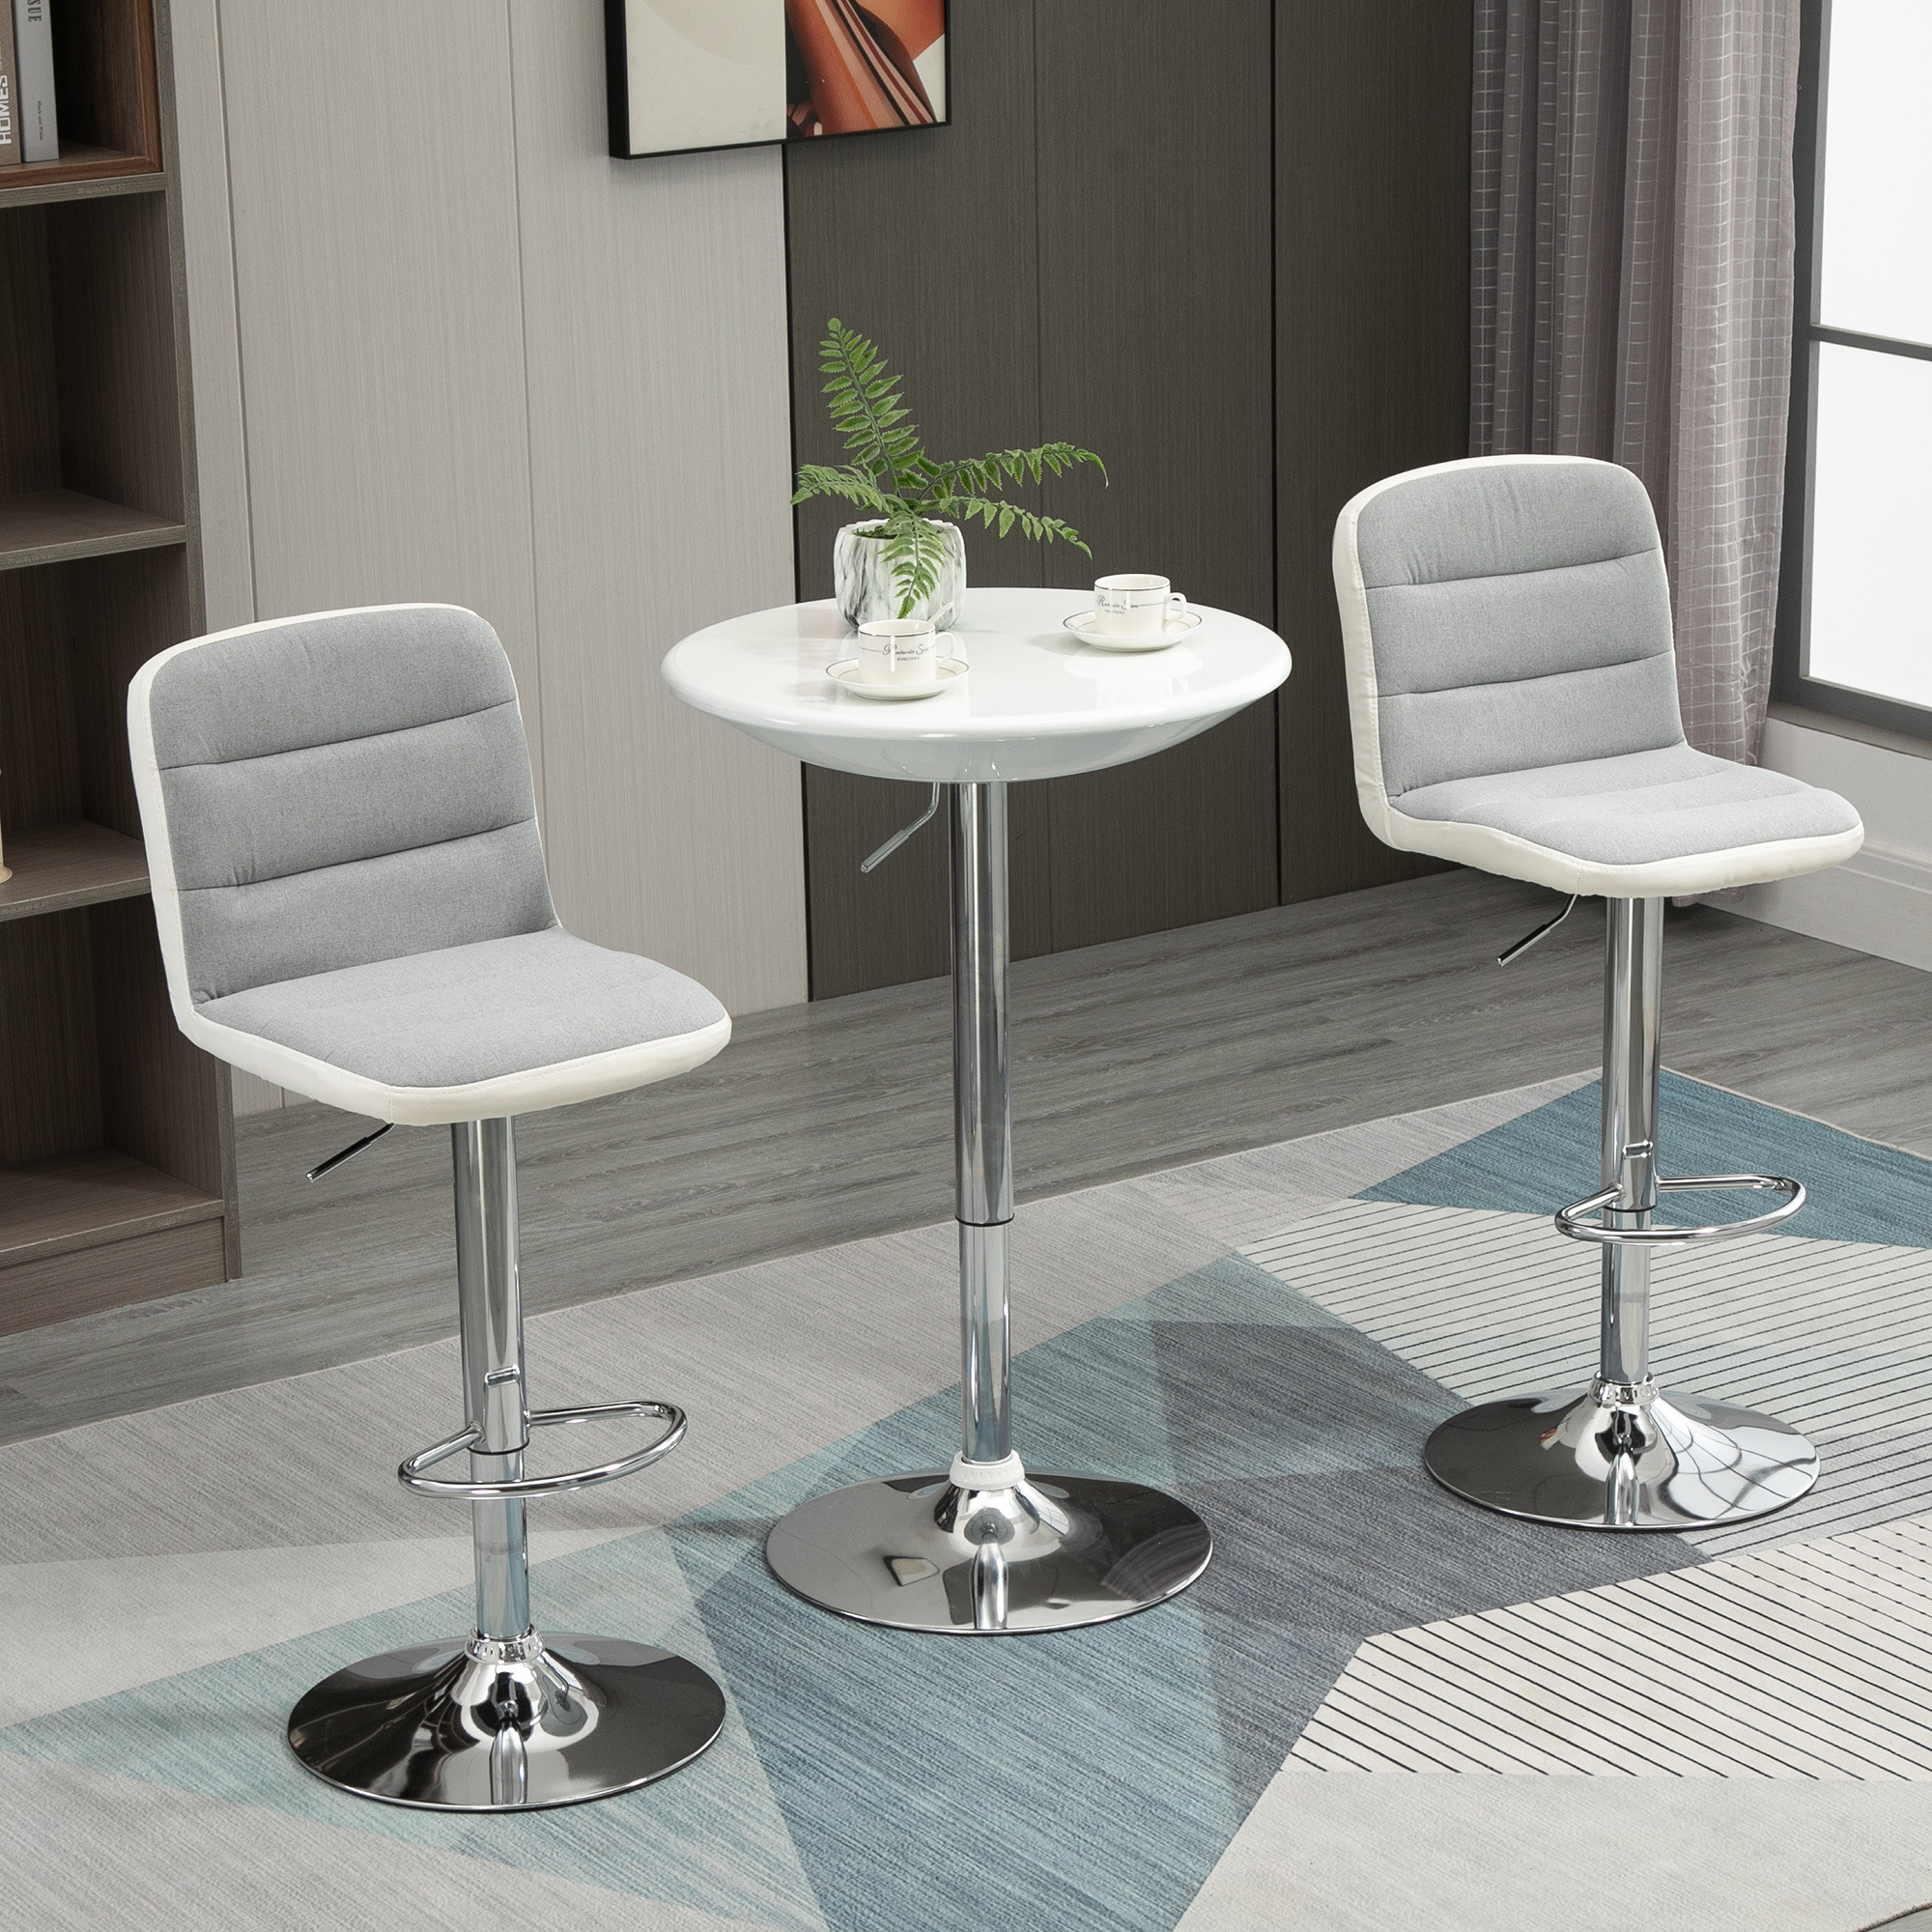 HOMCOM Bar stool Set of 2 Armless Adjustable Height Upholstered Bar Chair with Swivel Seat, Light Grey